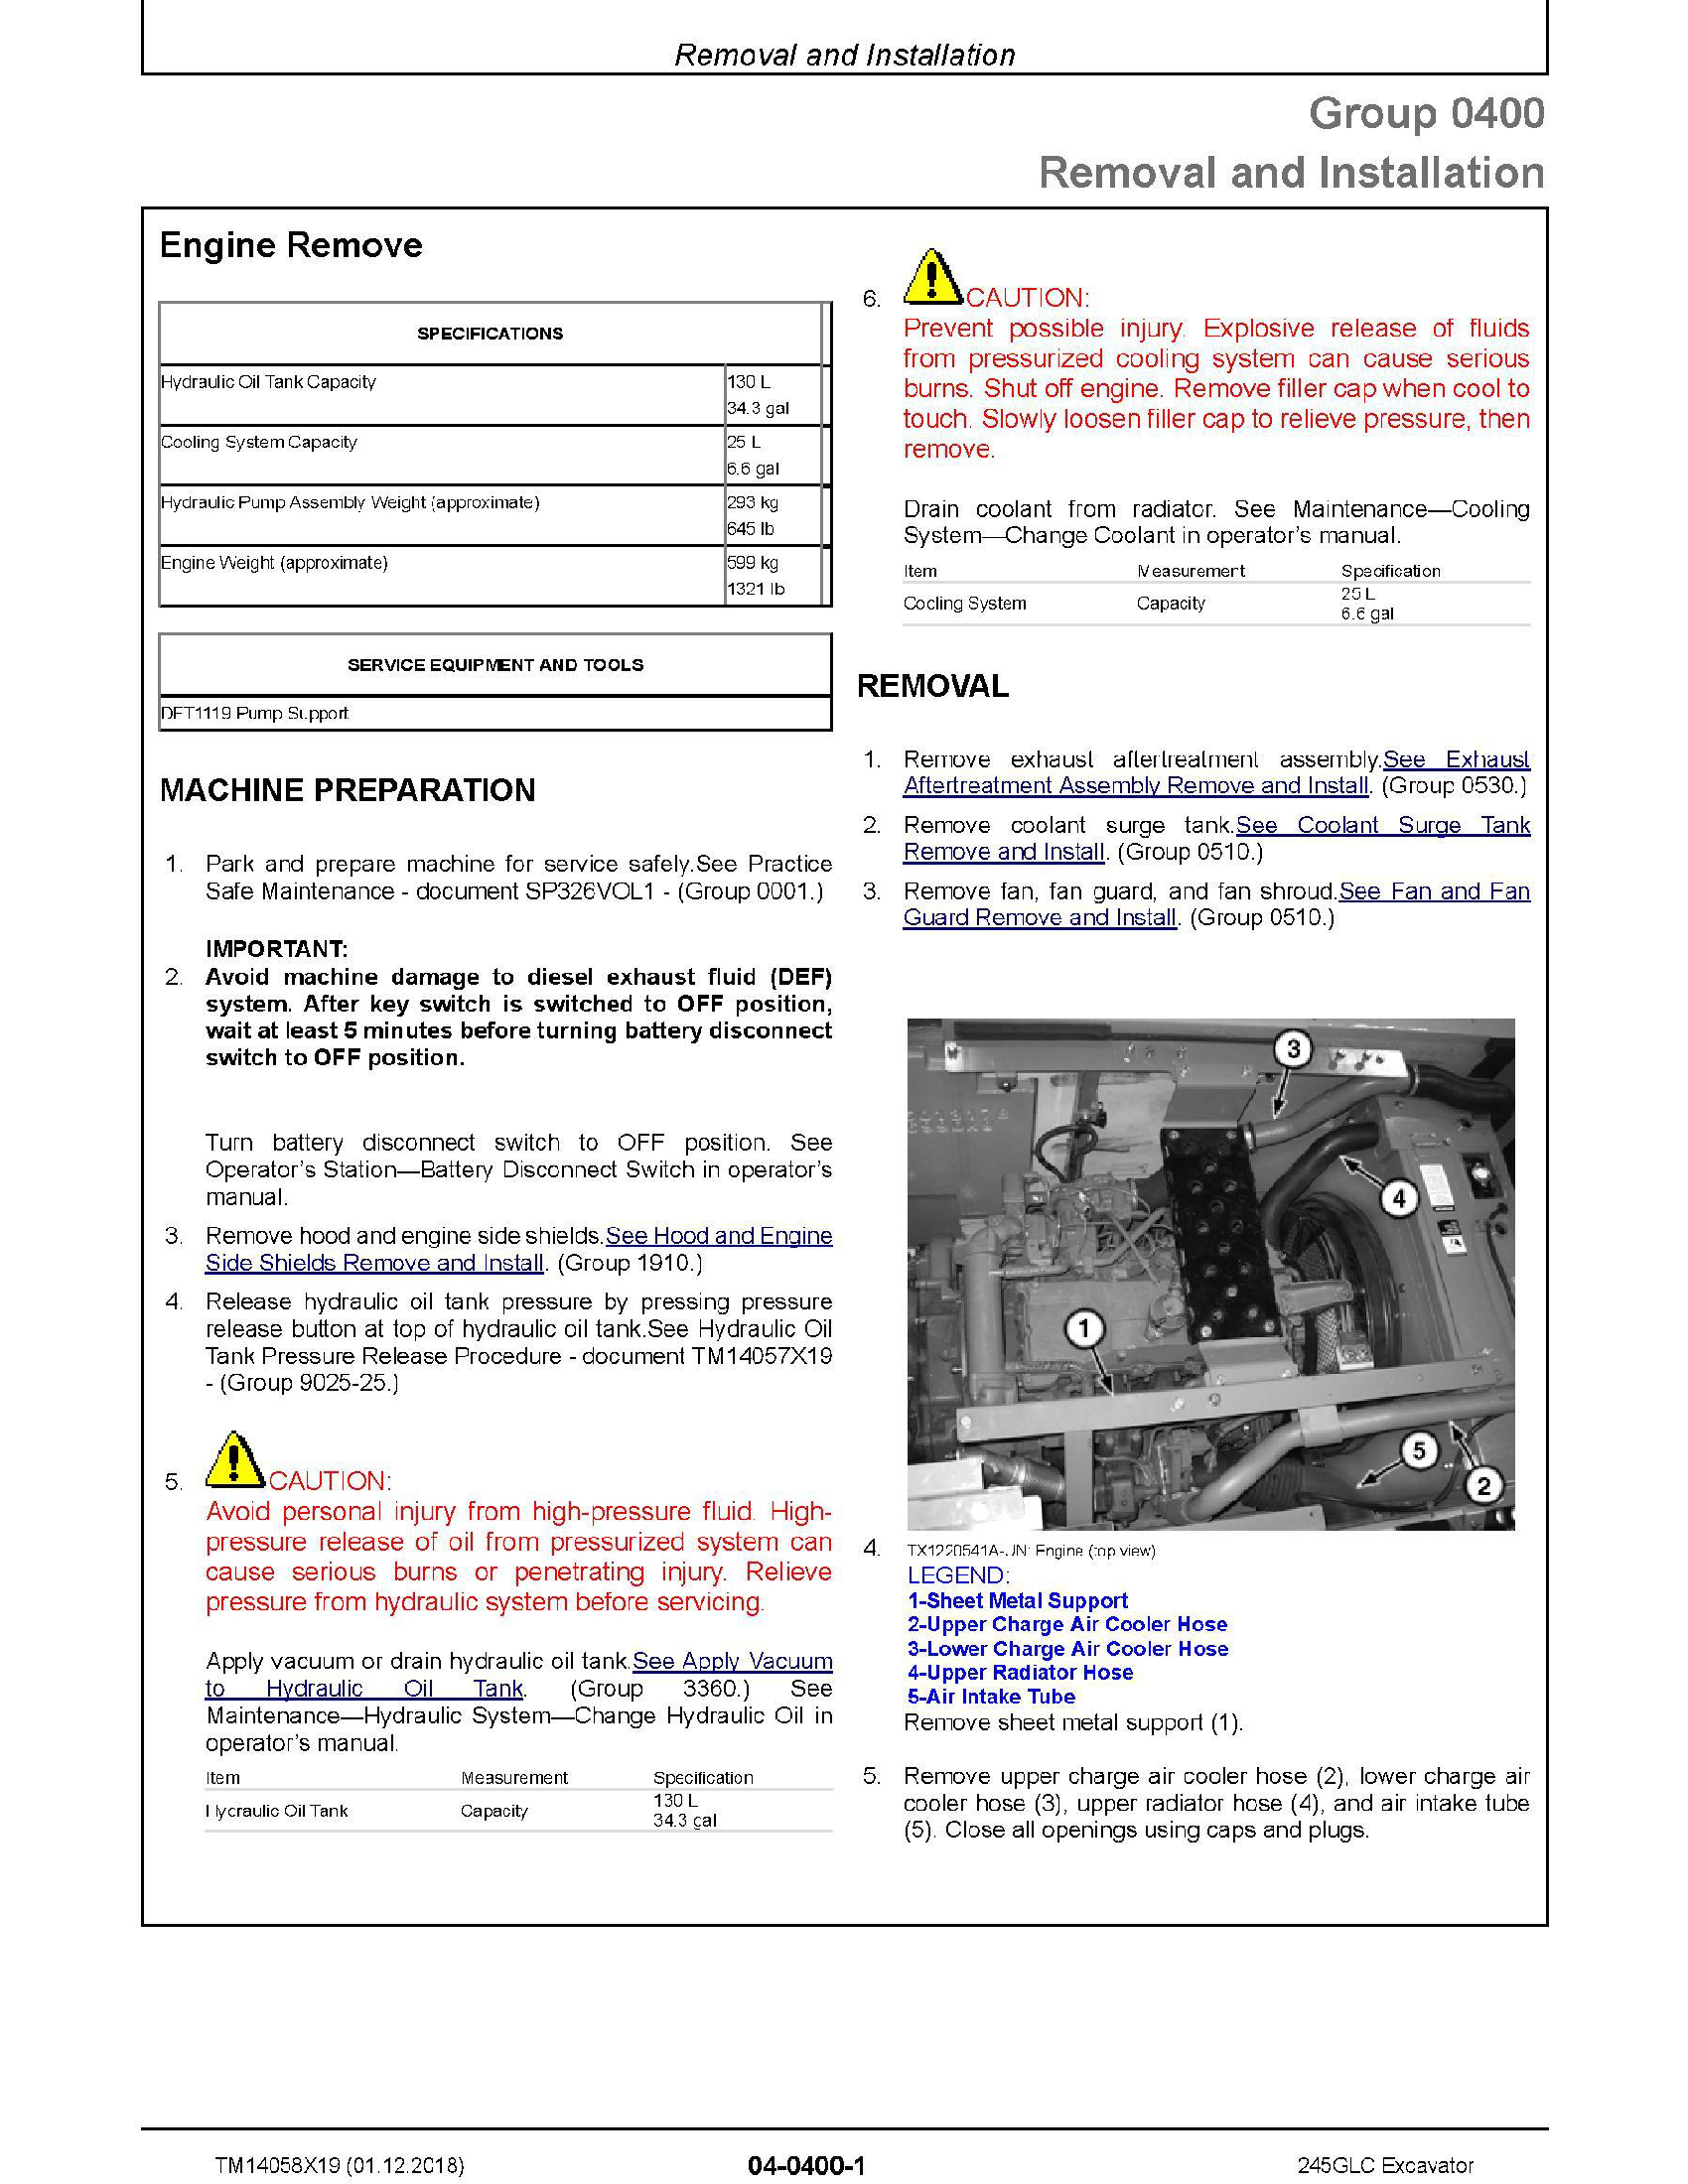 John Deere 450DLC manual pdf